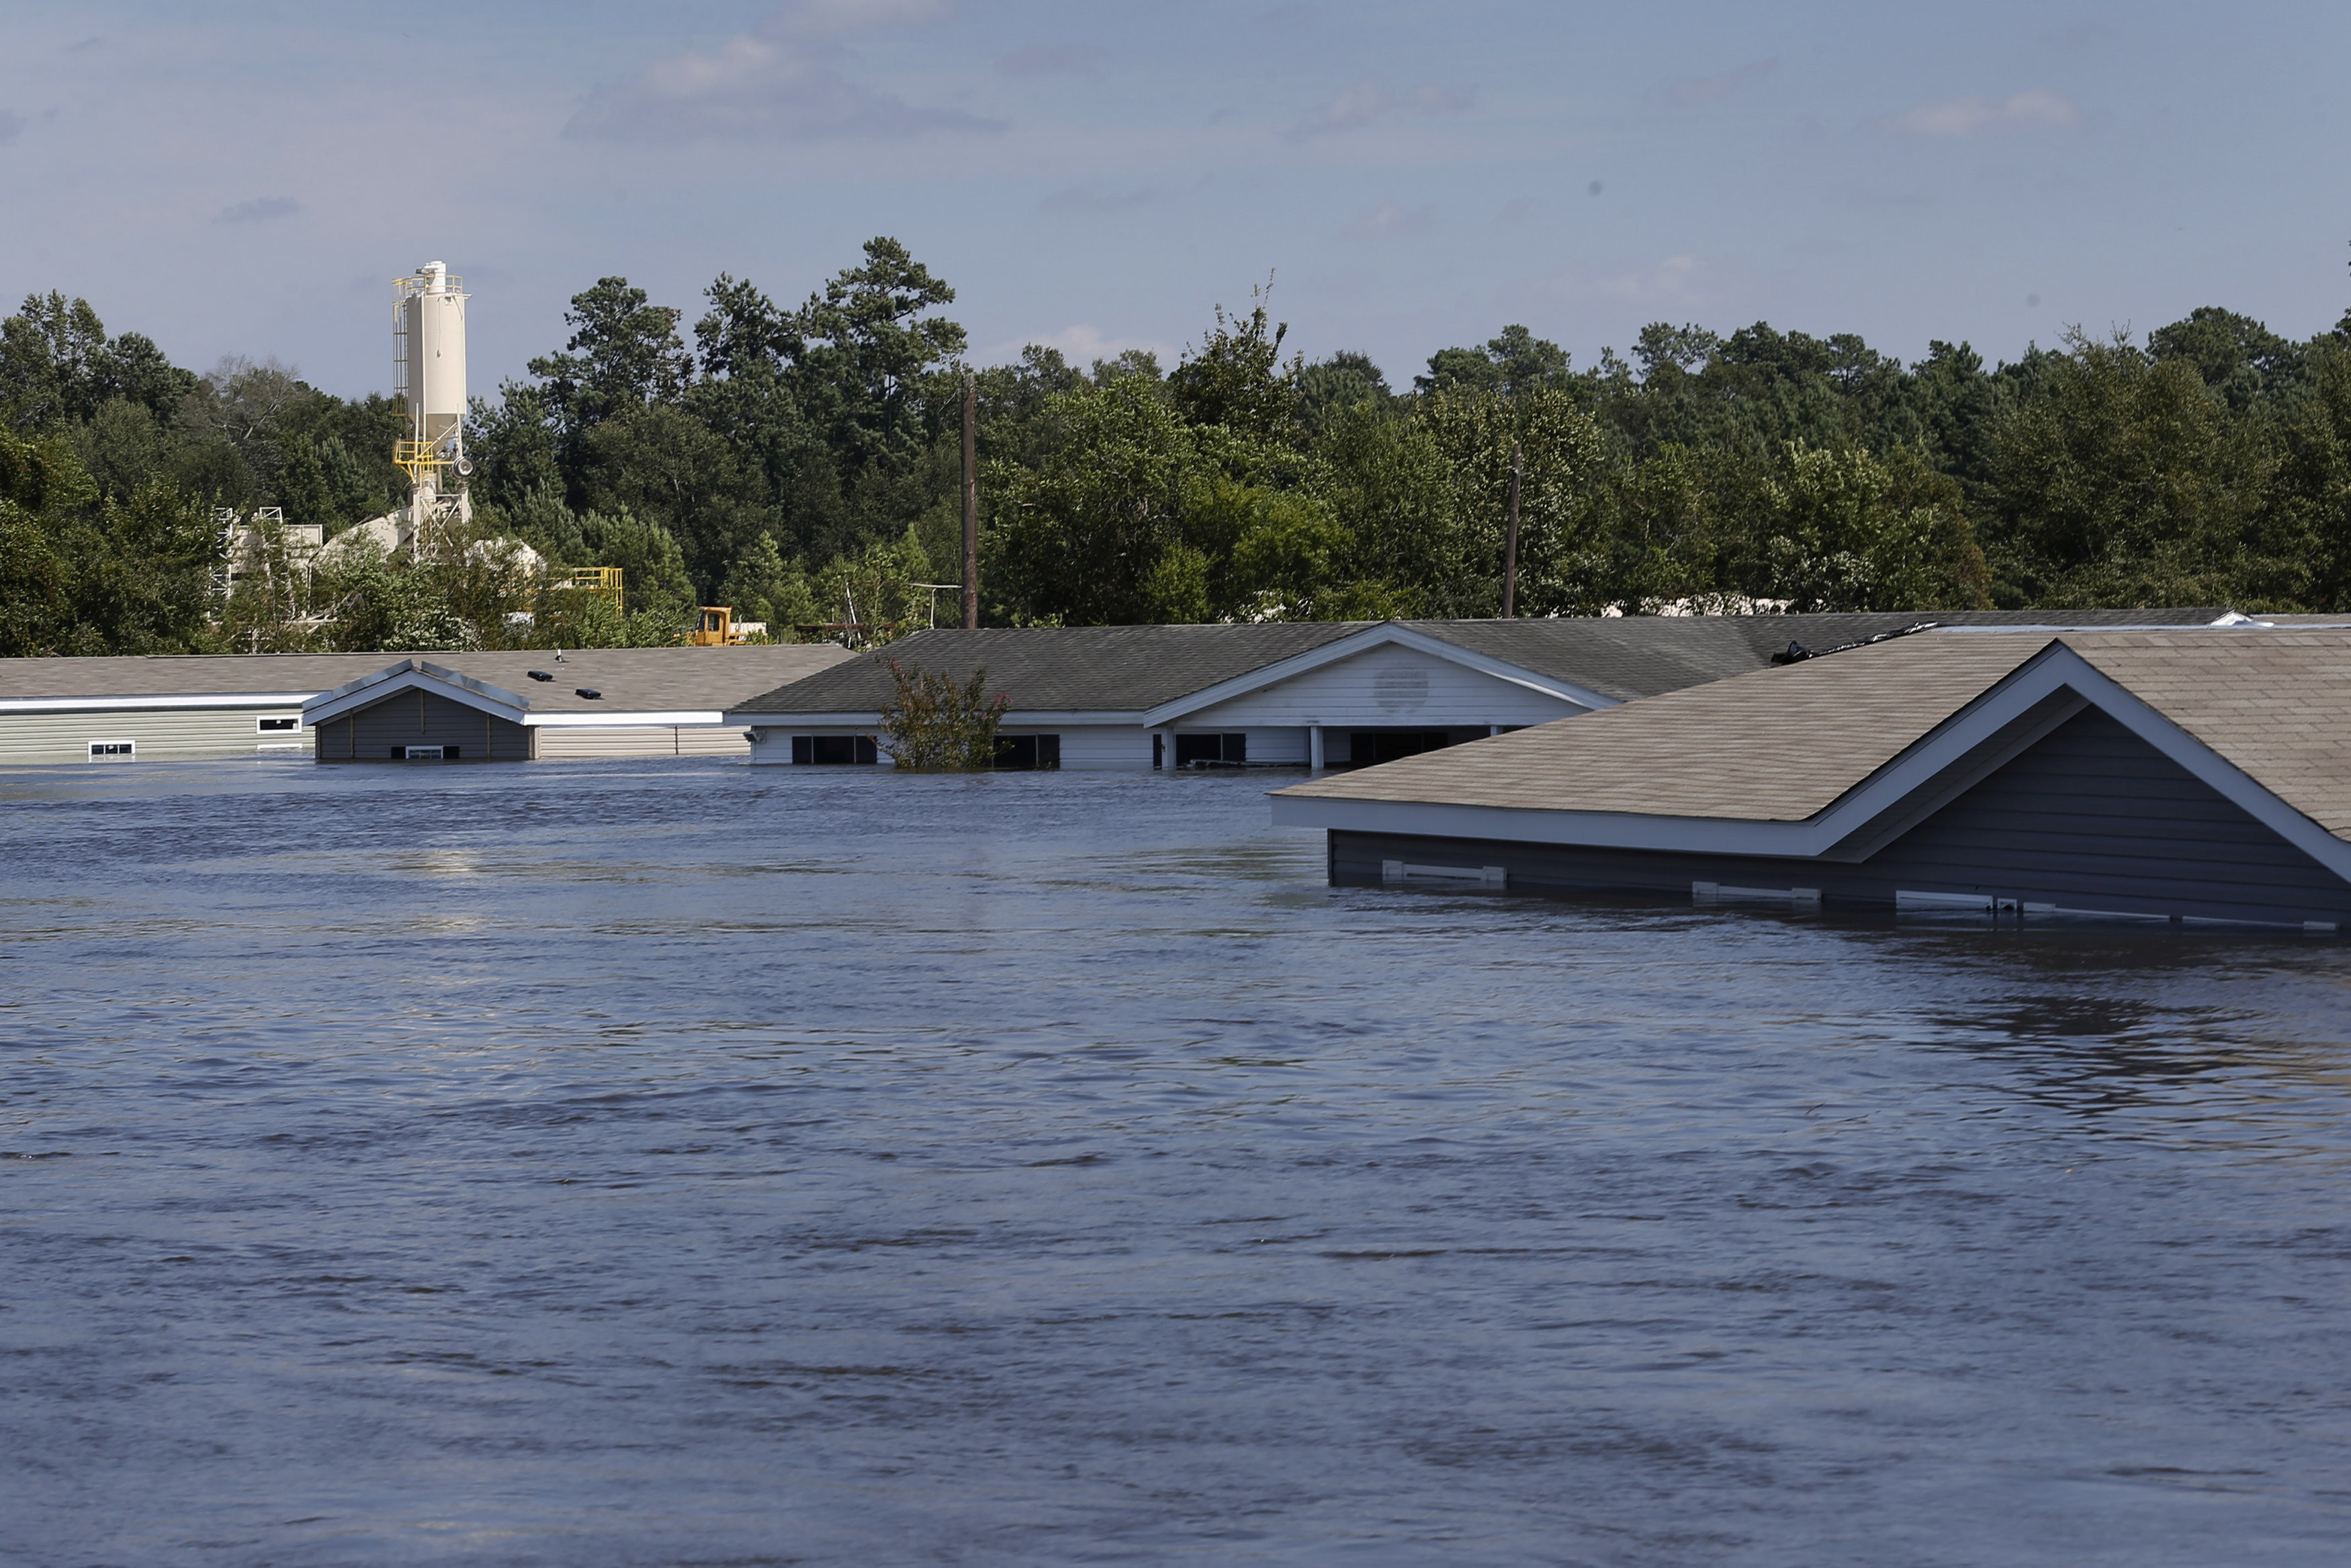 Последствия урагана "Харви" в Роуз-Сити, штат Техас. Фото: &copy;&nbsp;REUTERS/Jonathan Bachman